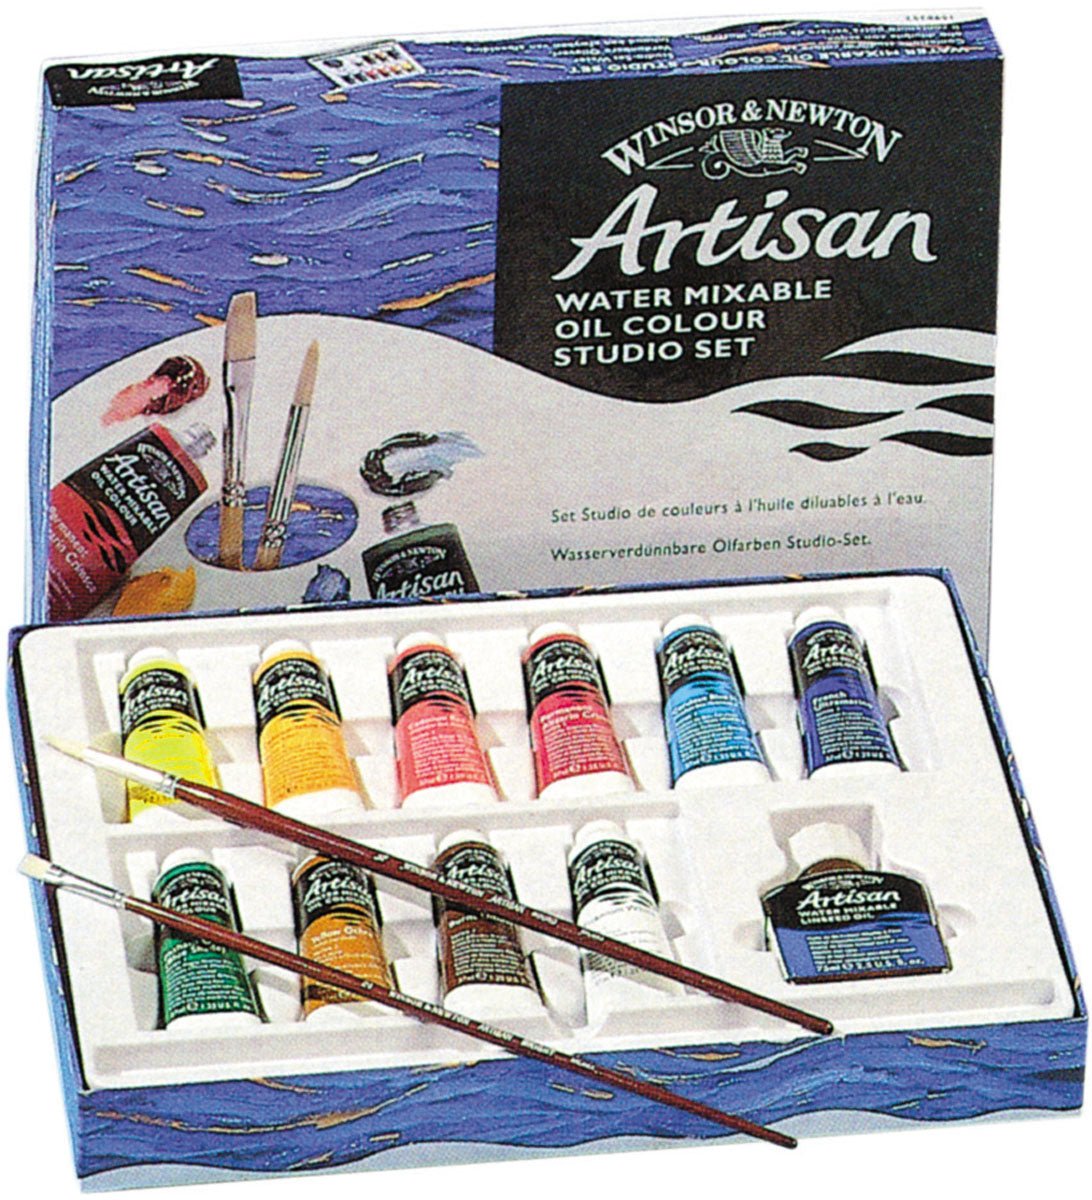 W & N Artisan Studio Set 10 x 37ml Tubes, 1 x 75ml Artisan Linseed Oil, Artisan Long Handle Flat 2 & 4 - theartshop.com.au